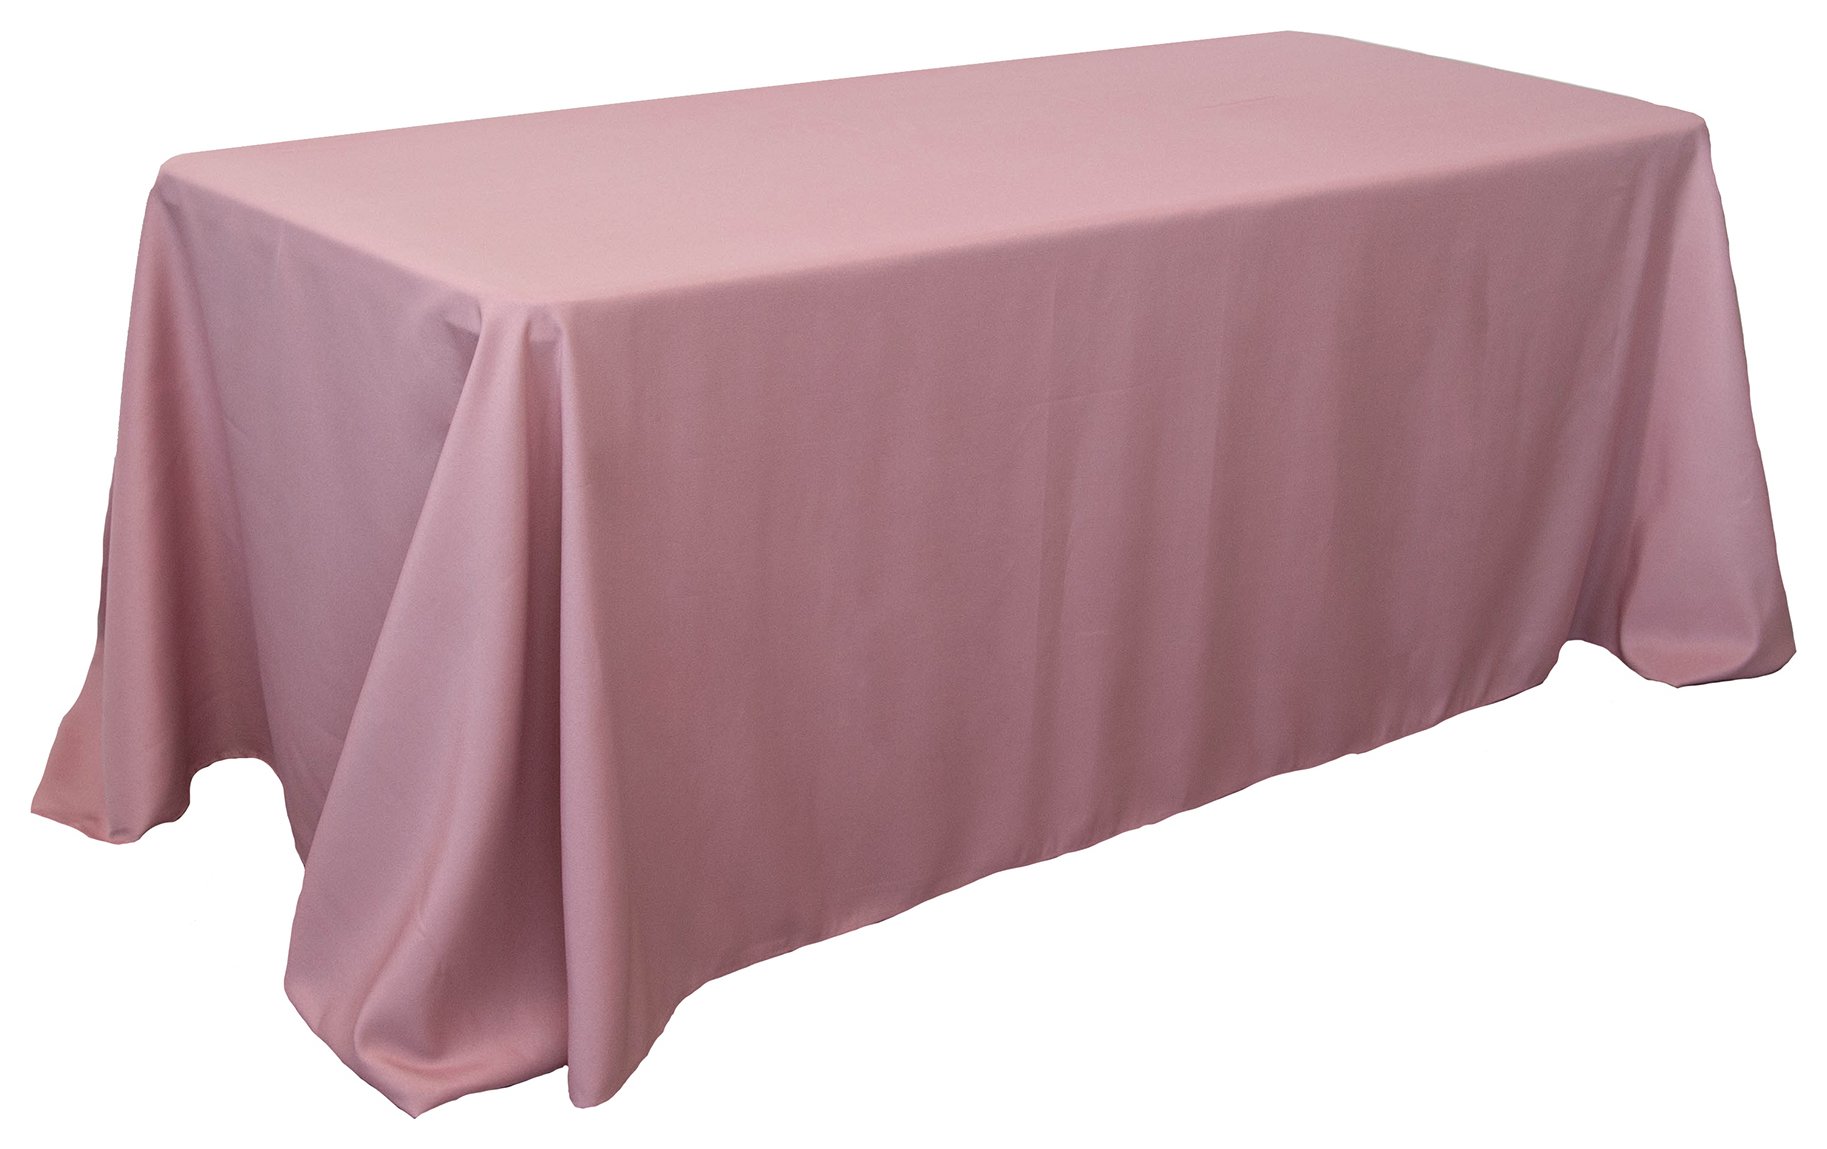 Скатерть розового цвета. Розовая скатерть. Пыльно розовая скатерть. Нежно розовая скатерть. Скатерть на прямоугольный стол.